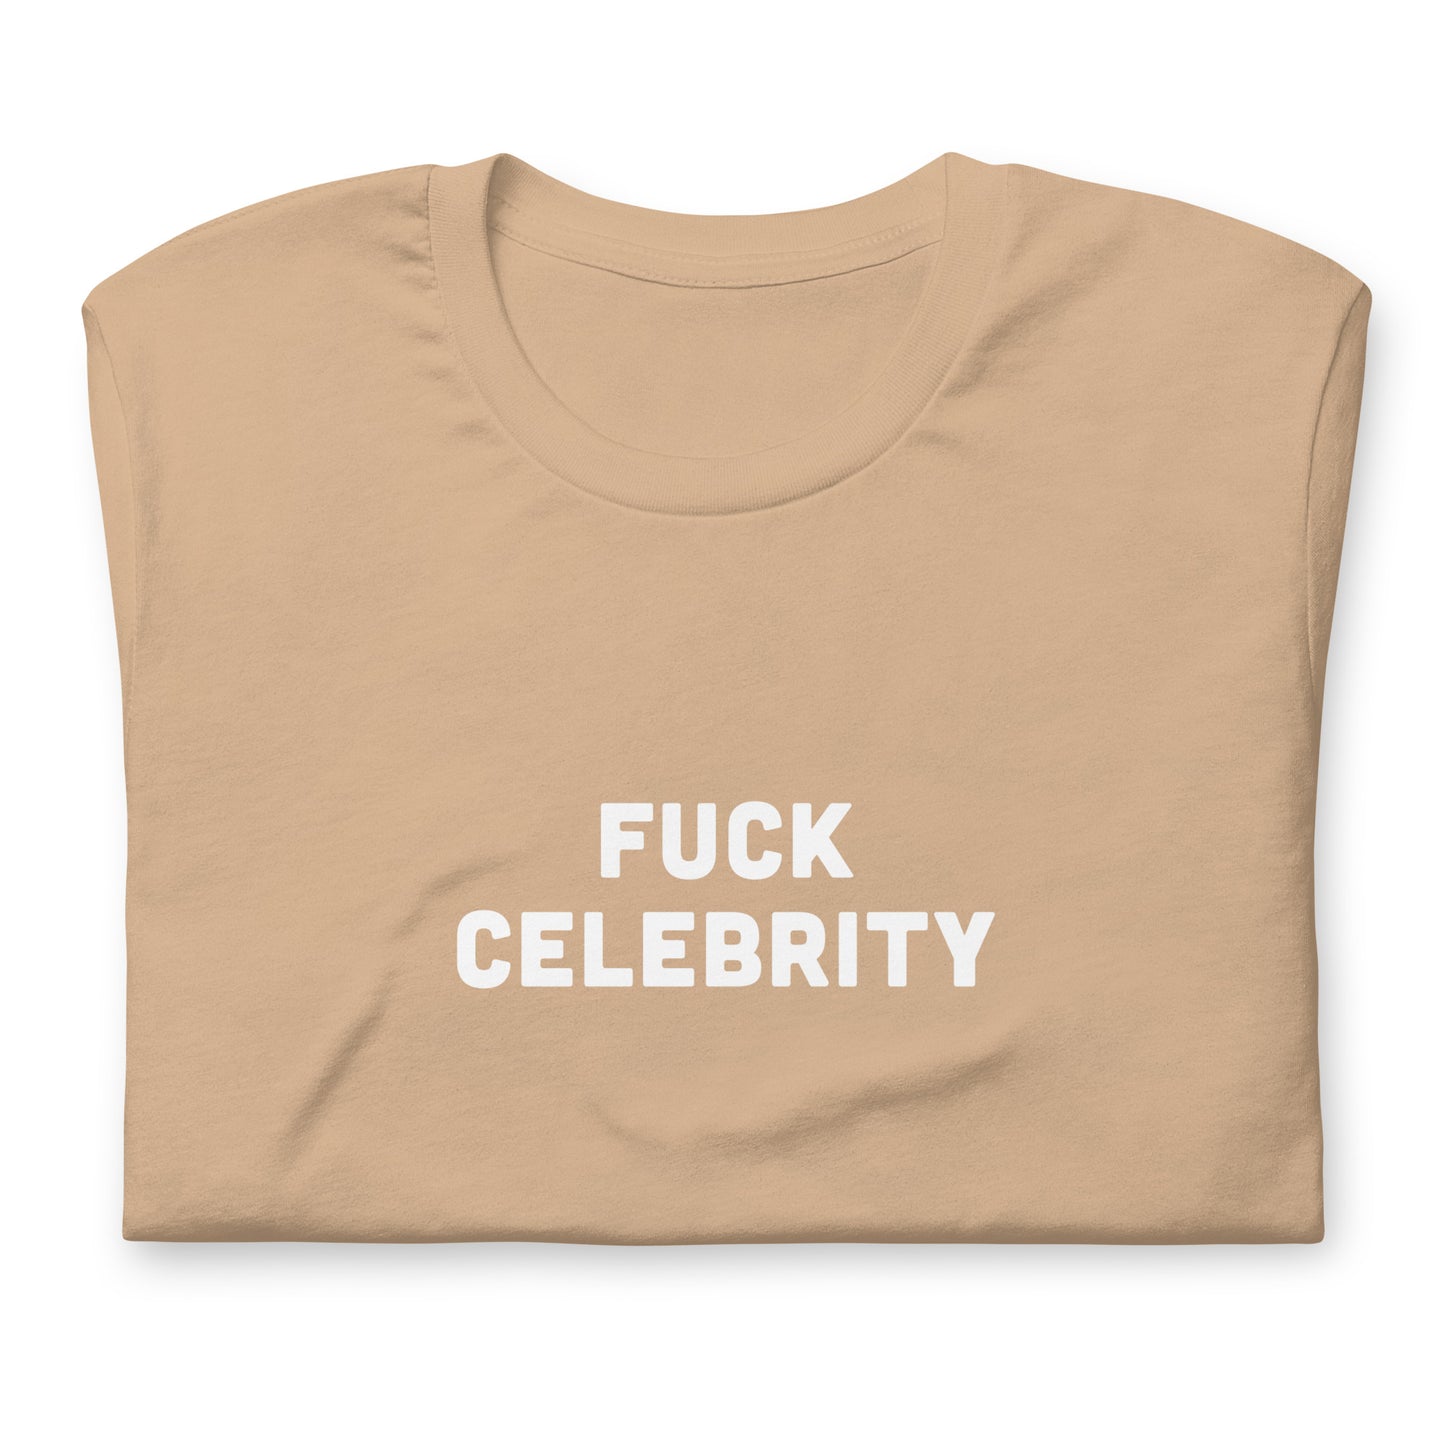 Fuck Celebrity T-Shirt Size XL Color Forest